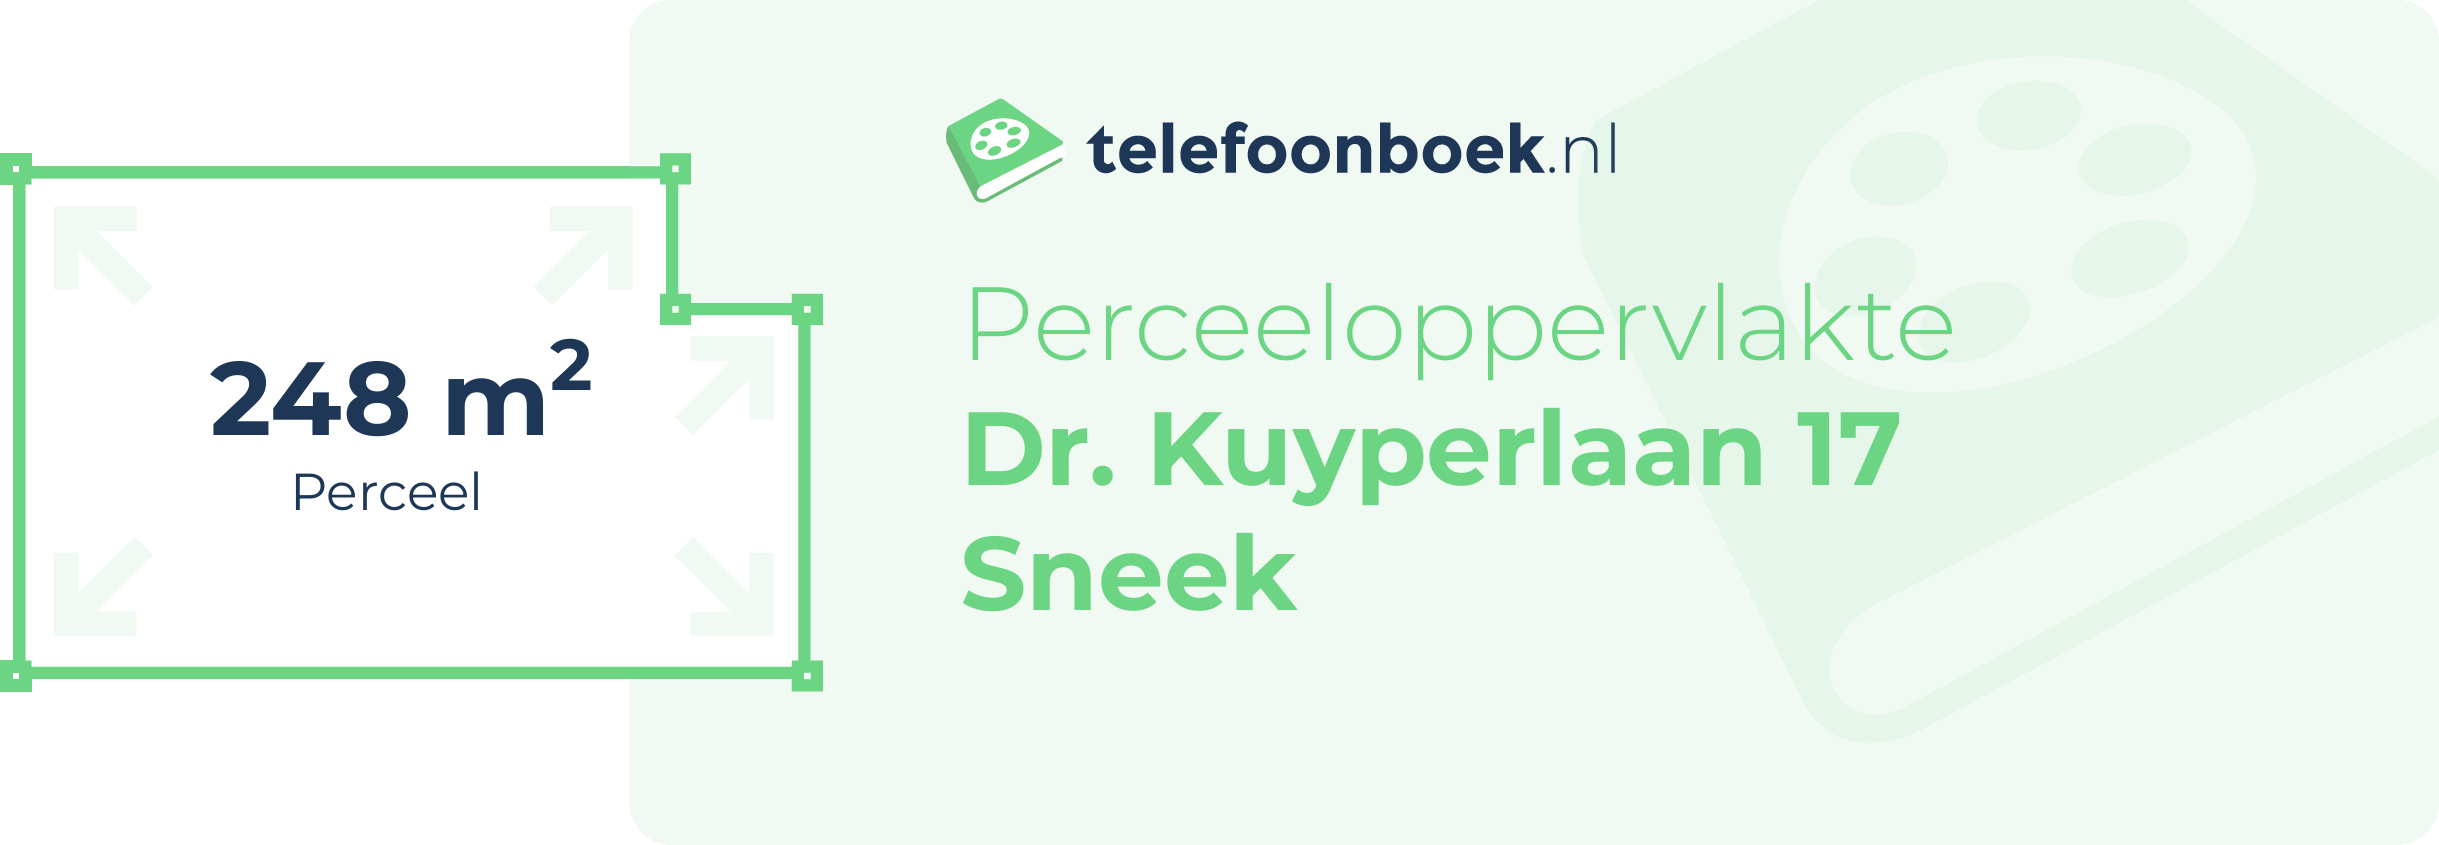 Perceeloppervlakte Dr. Kuyperlaan 17 Sneek